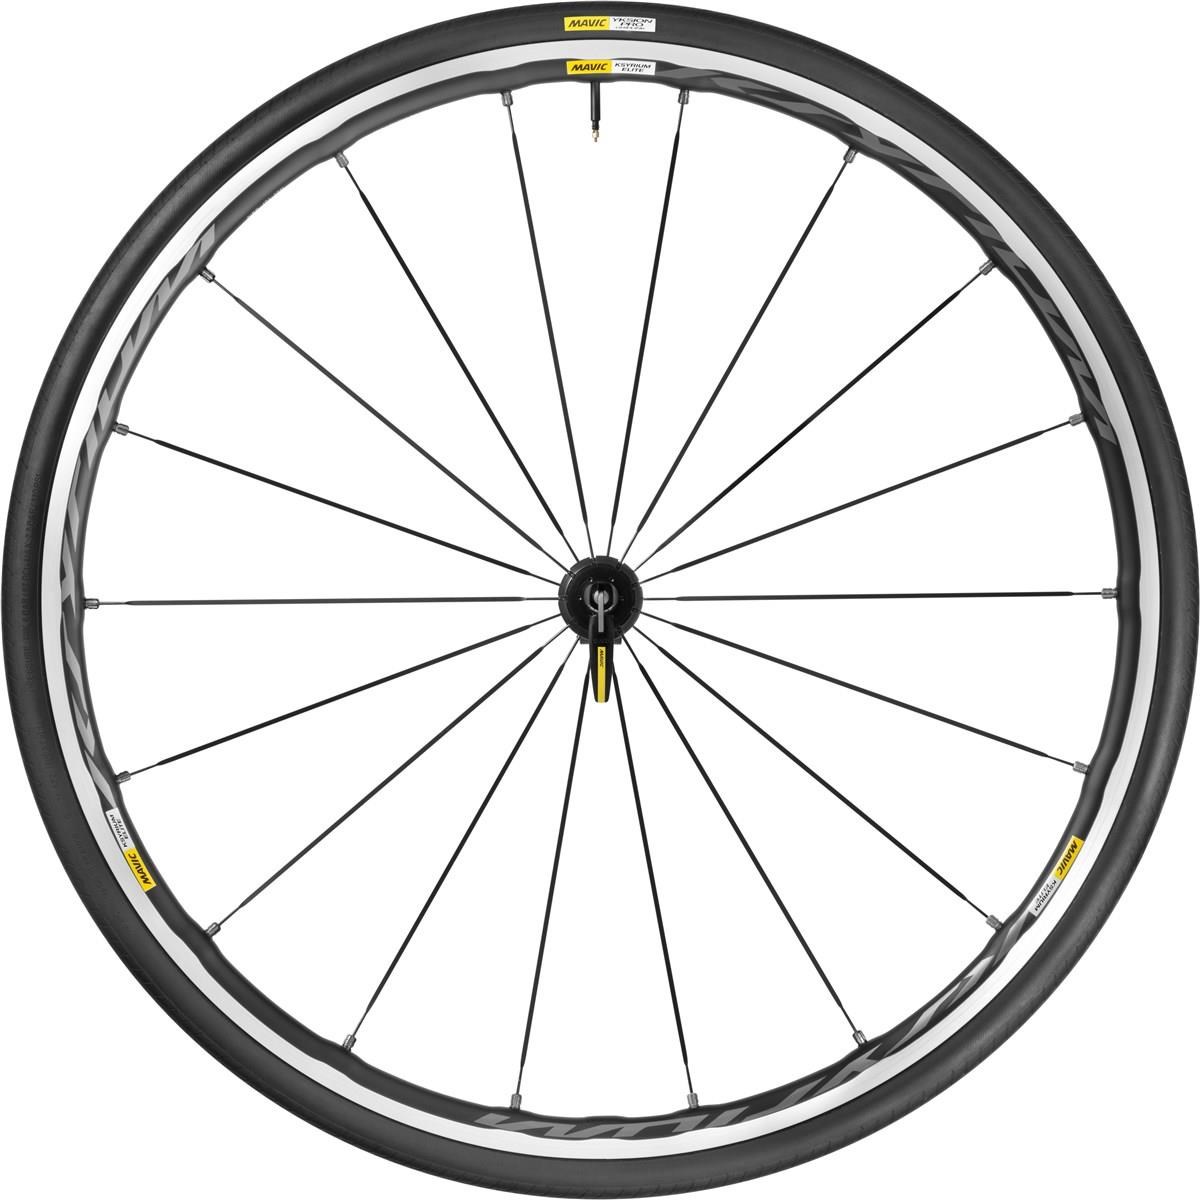 Mavic Ksyrium Elite Clincher Road Wheels 2017 product image